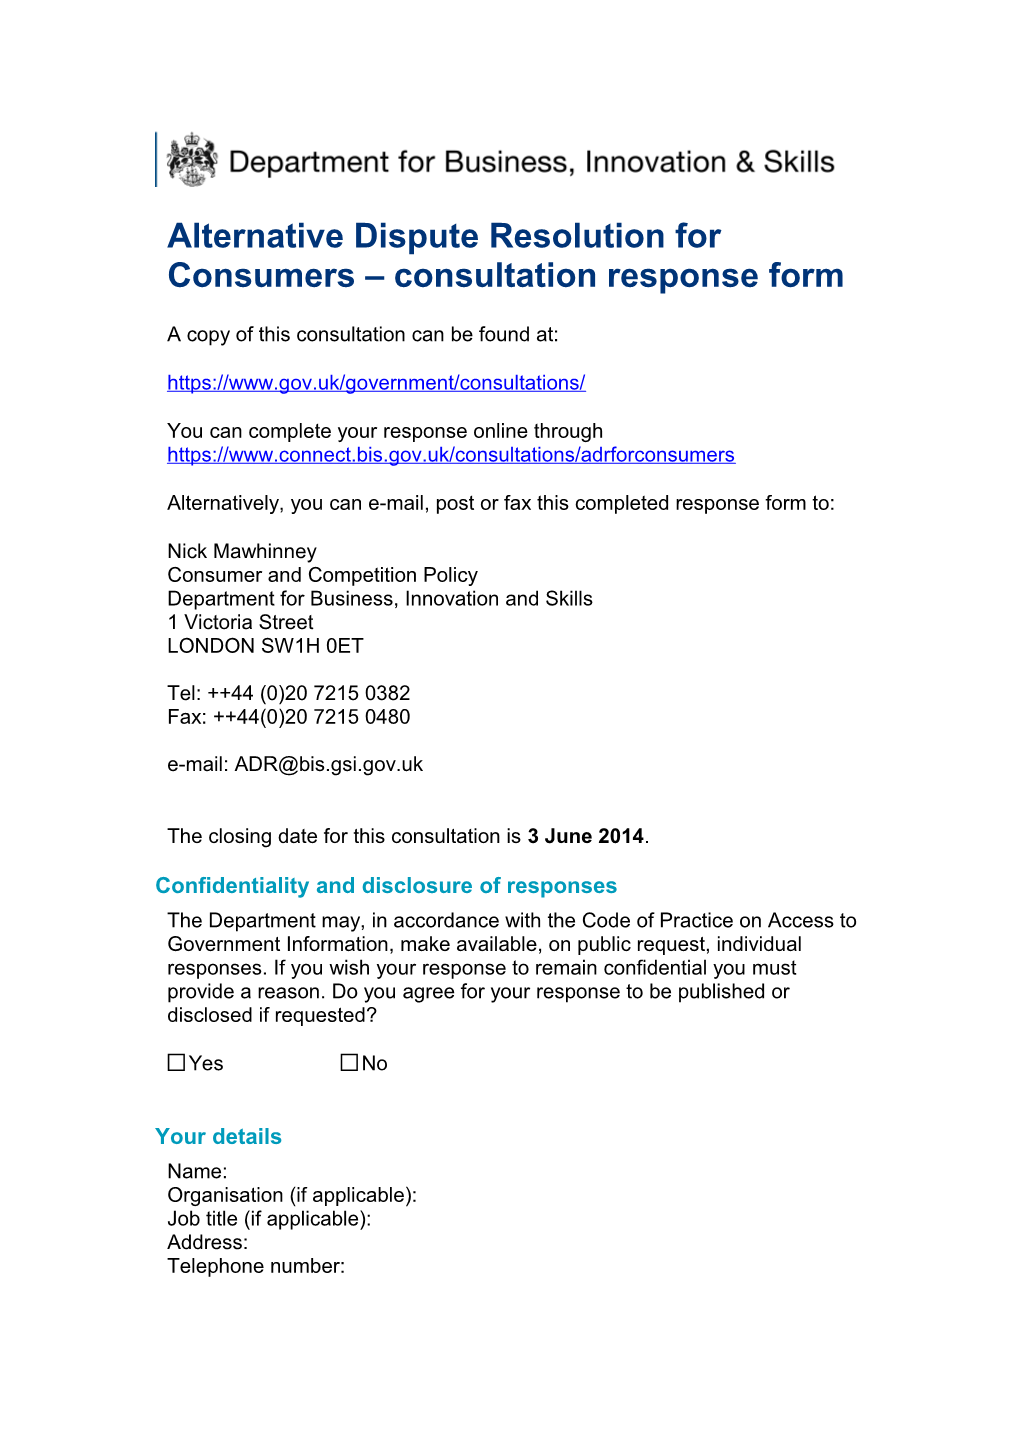 Annex XX: Alternative Dispute Resolution for Consumers Response Form